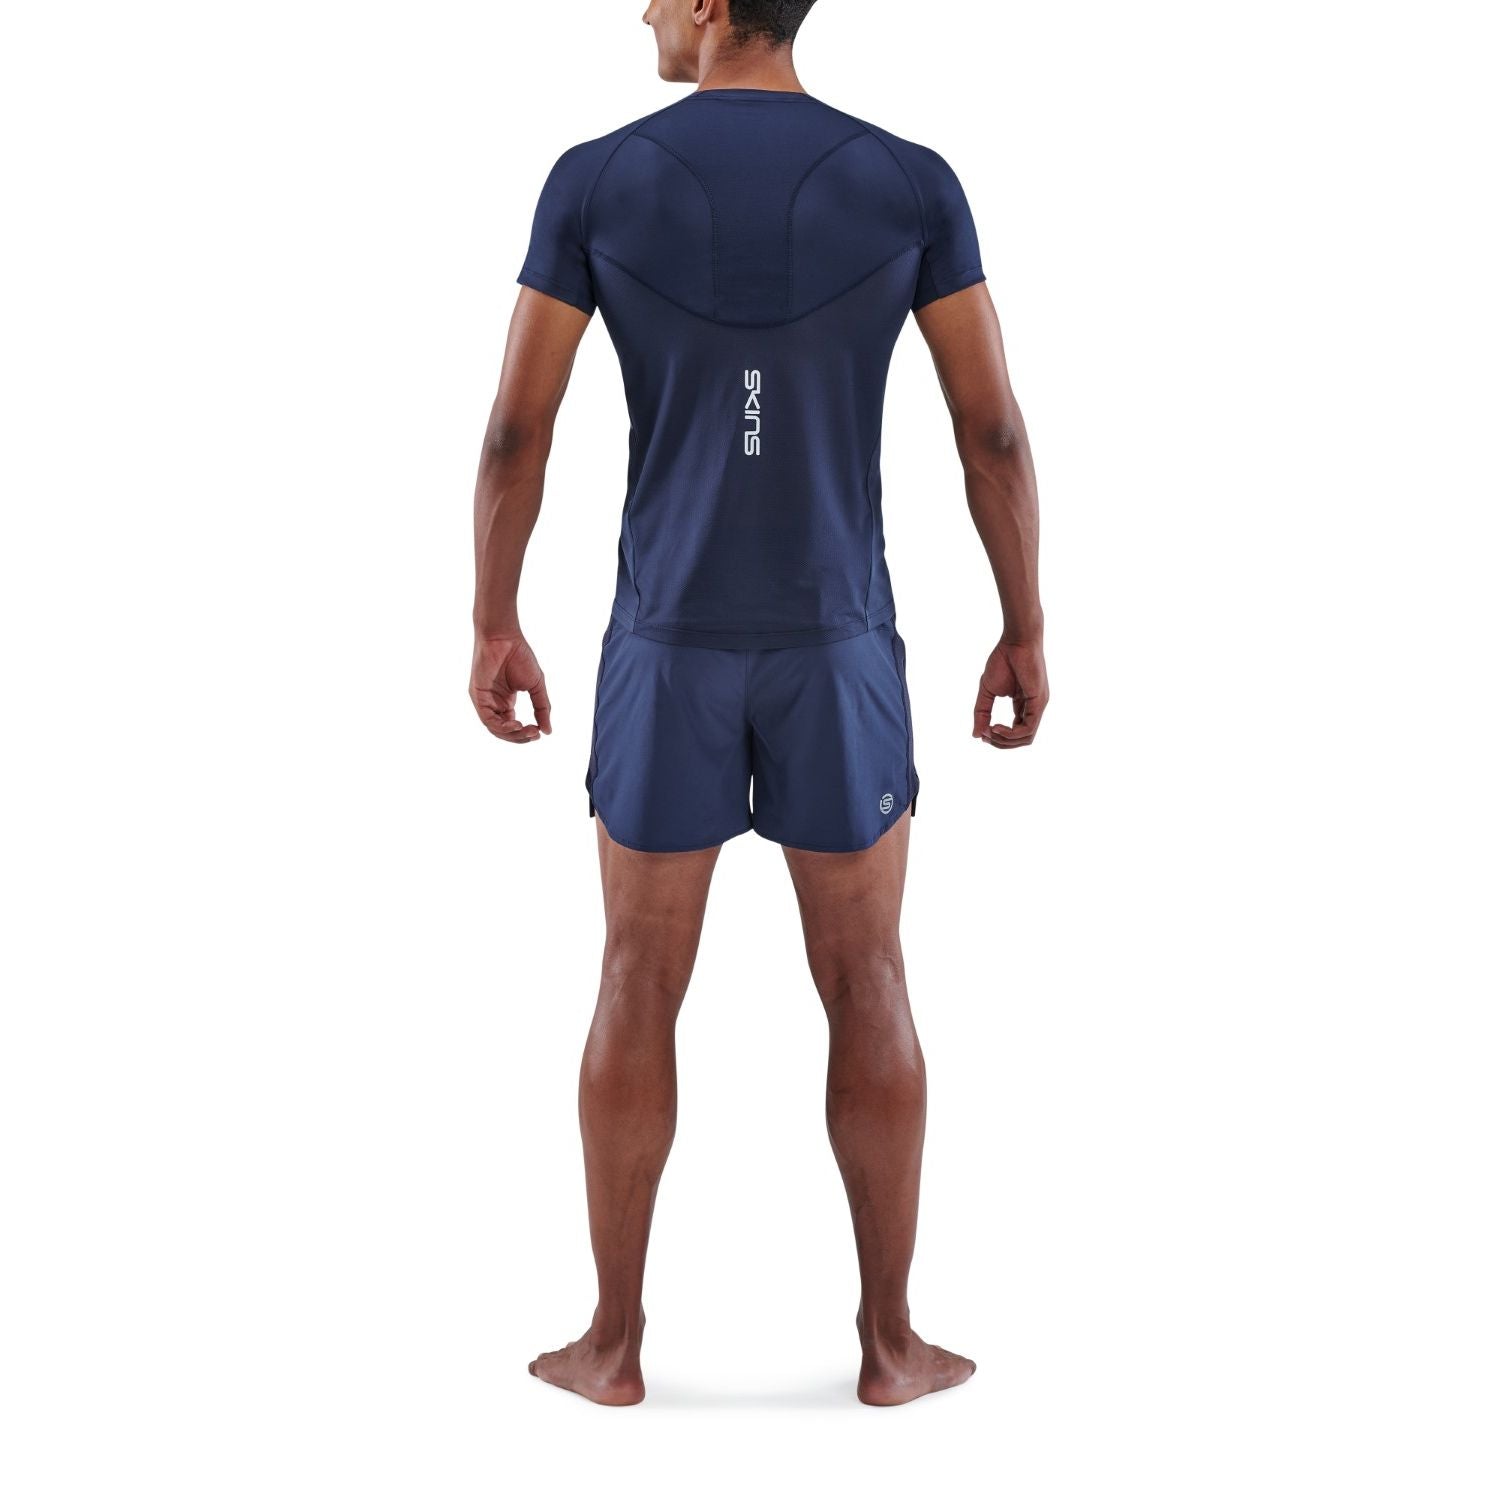 Skins Compression Men's Series-3 Short Sleeve Top